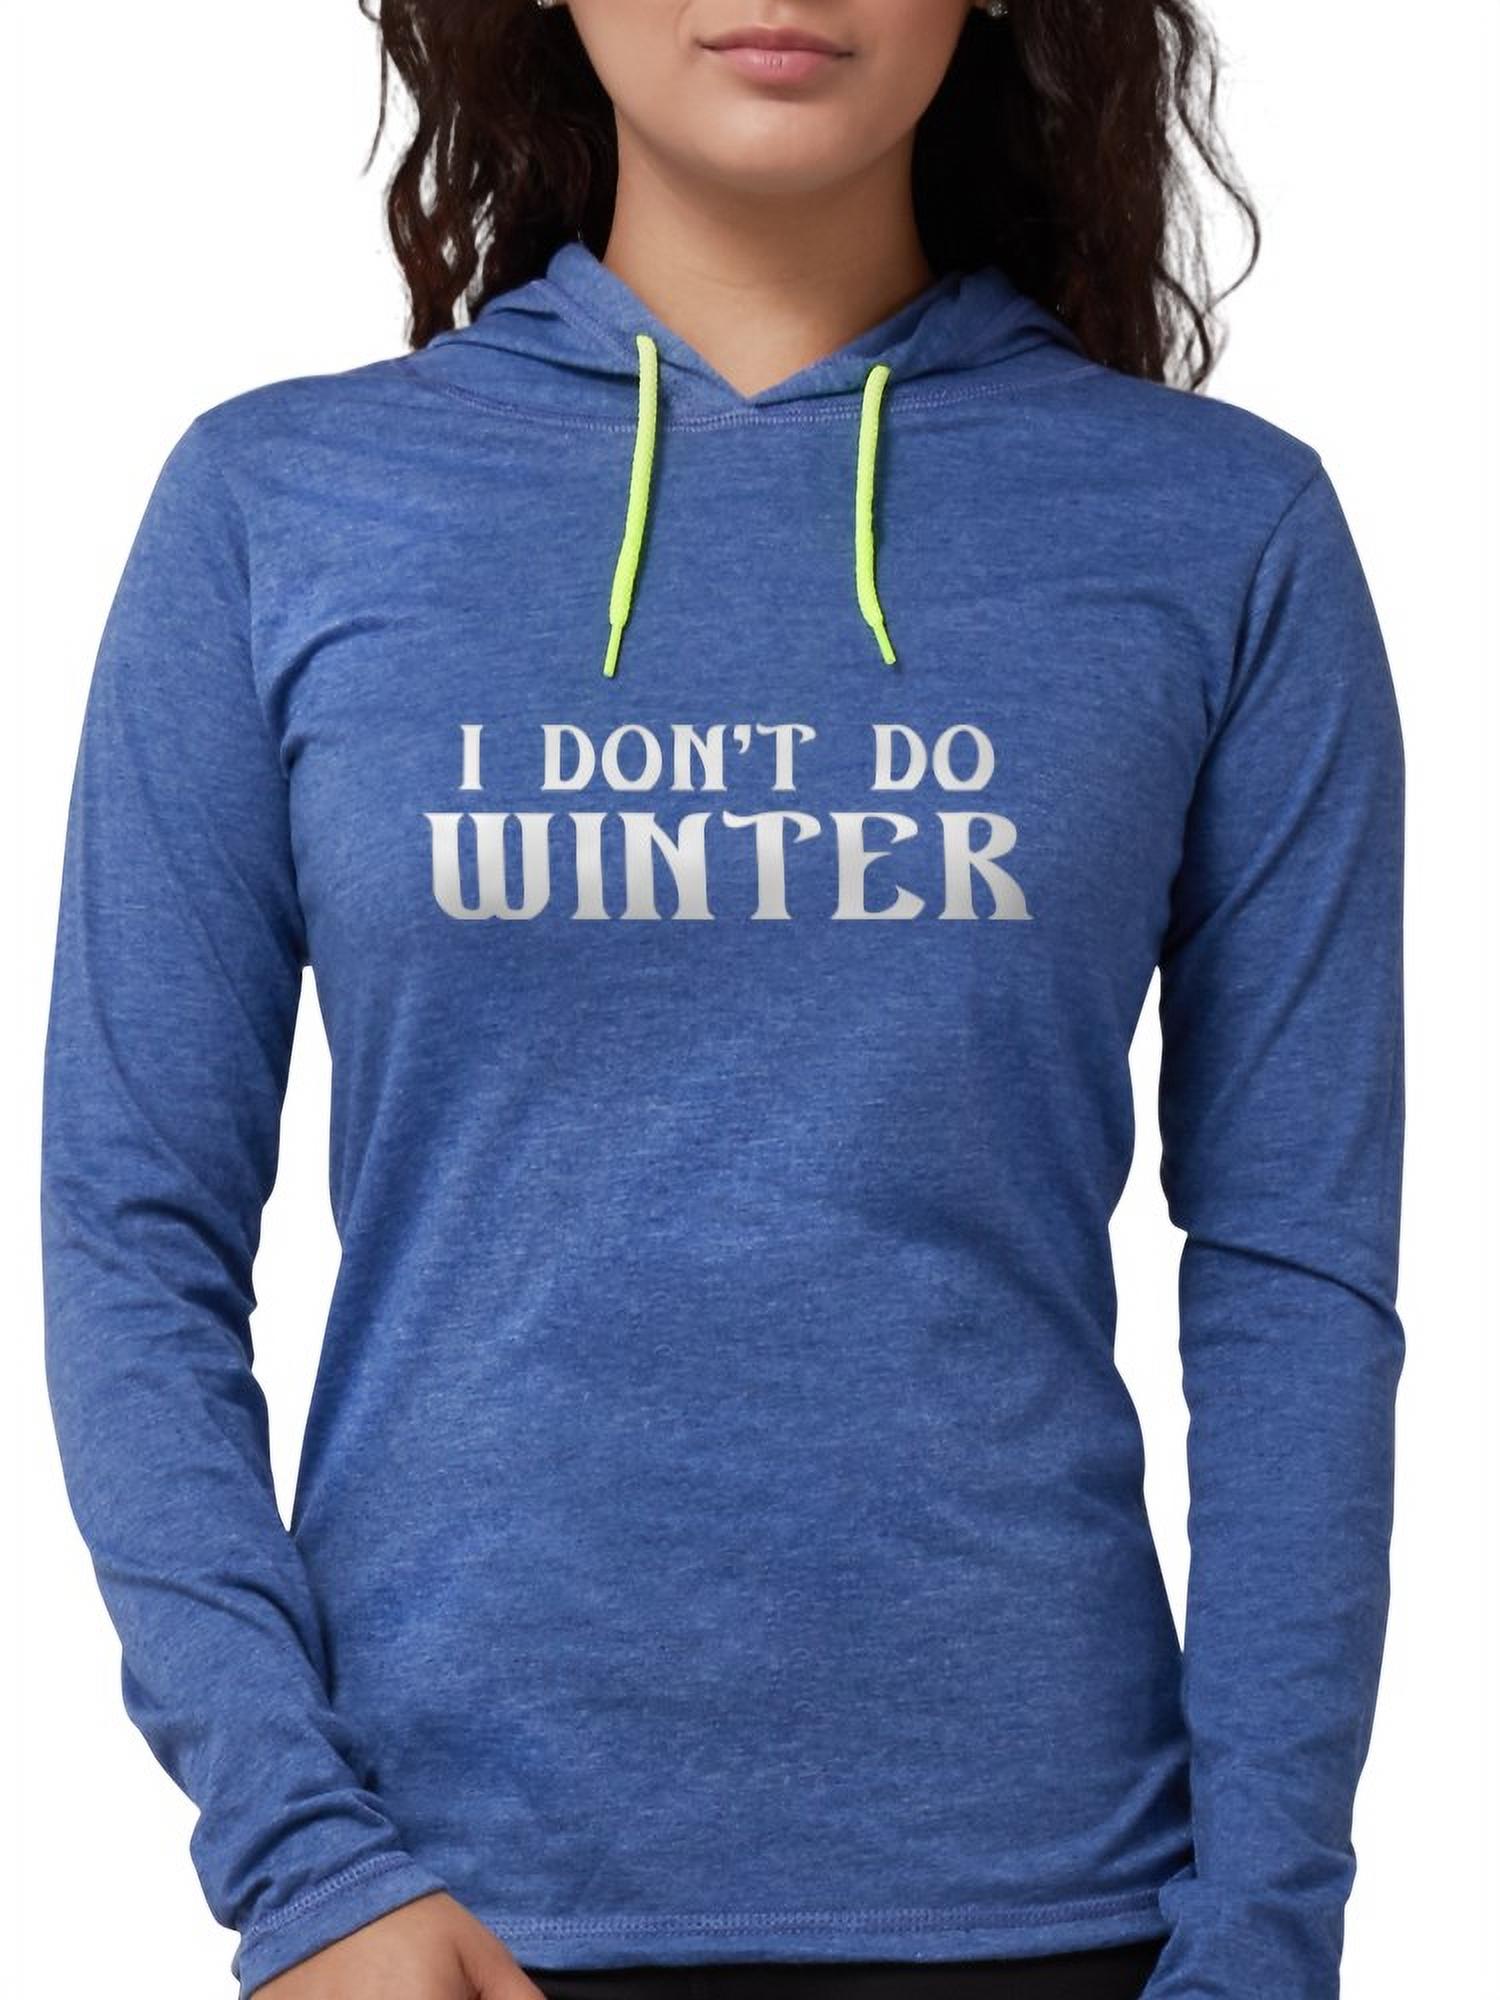 CafePress - I Don't Do Winter Long Sleeve T Shirt - Womens Hooded Shirt - image 1 of 1